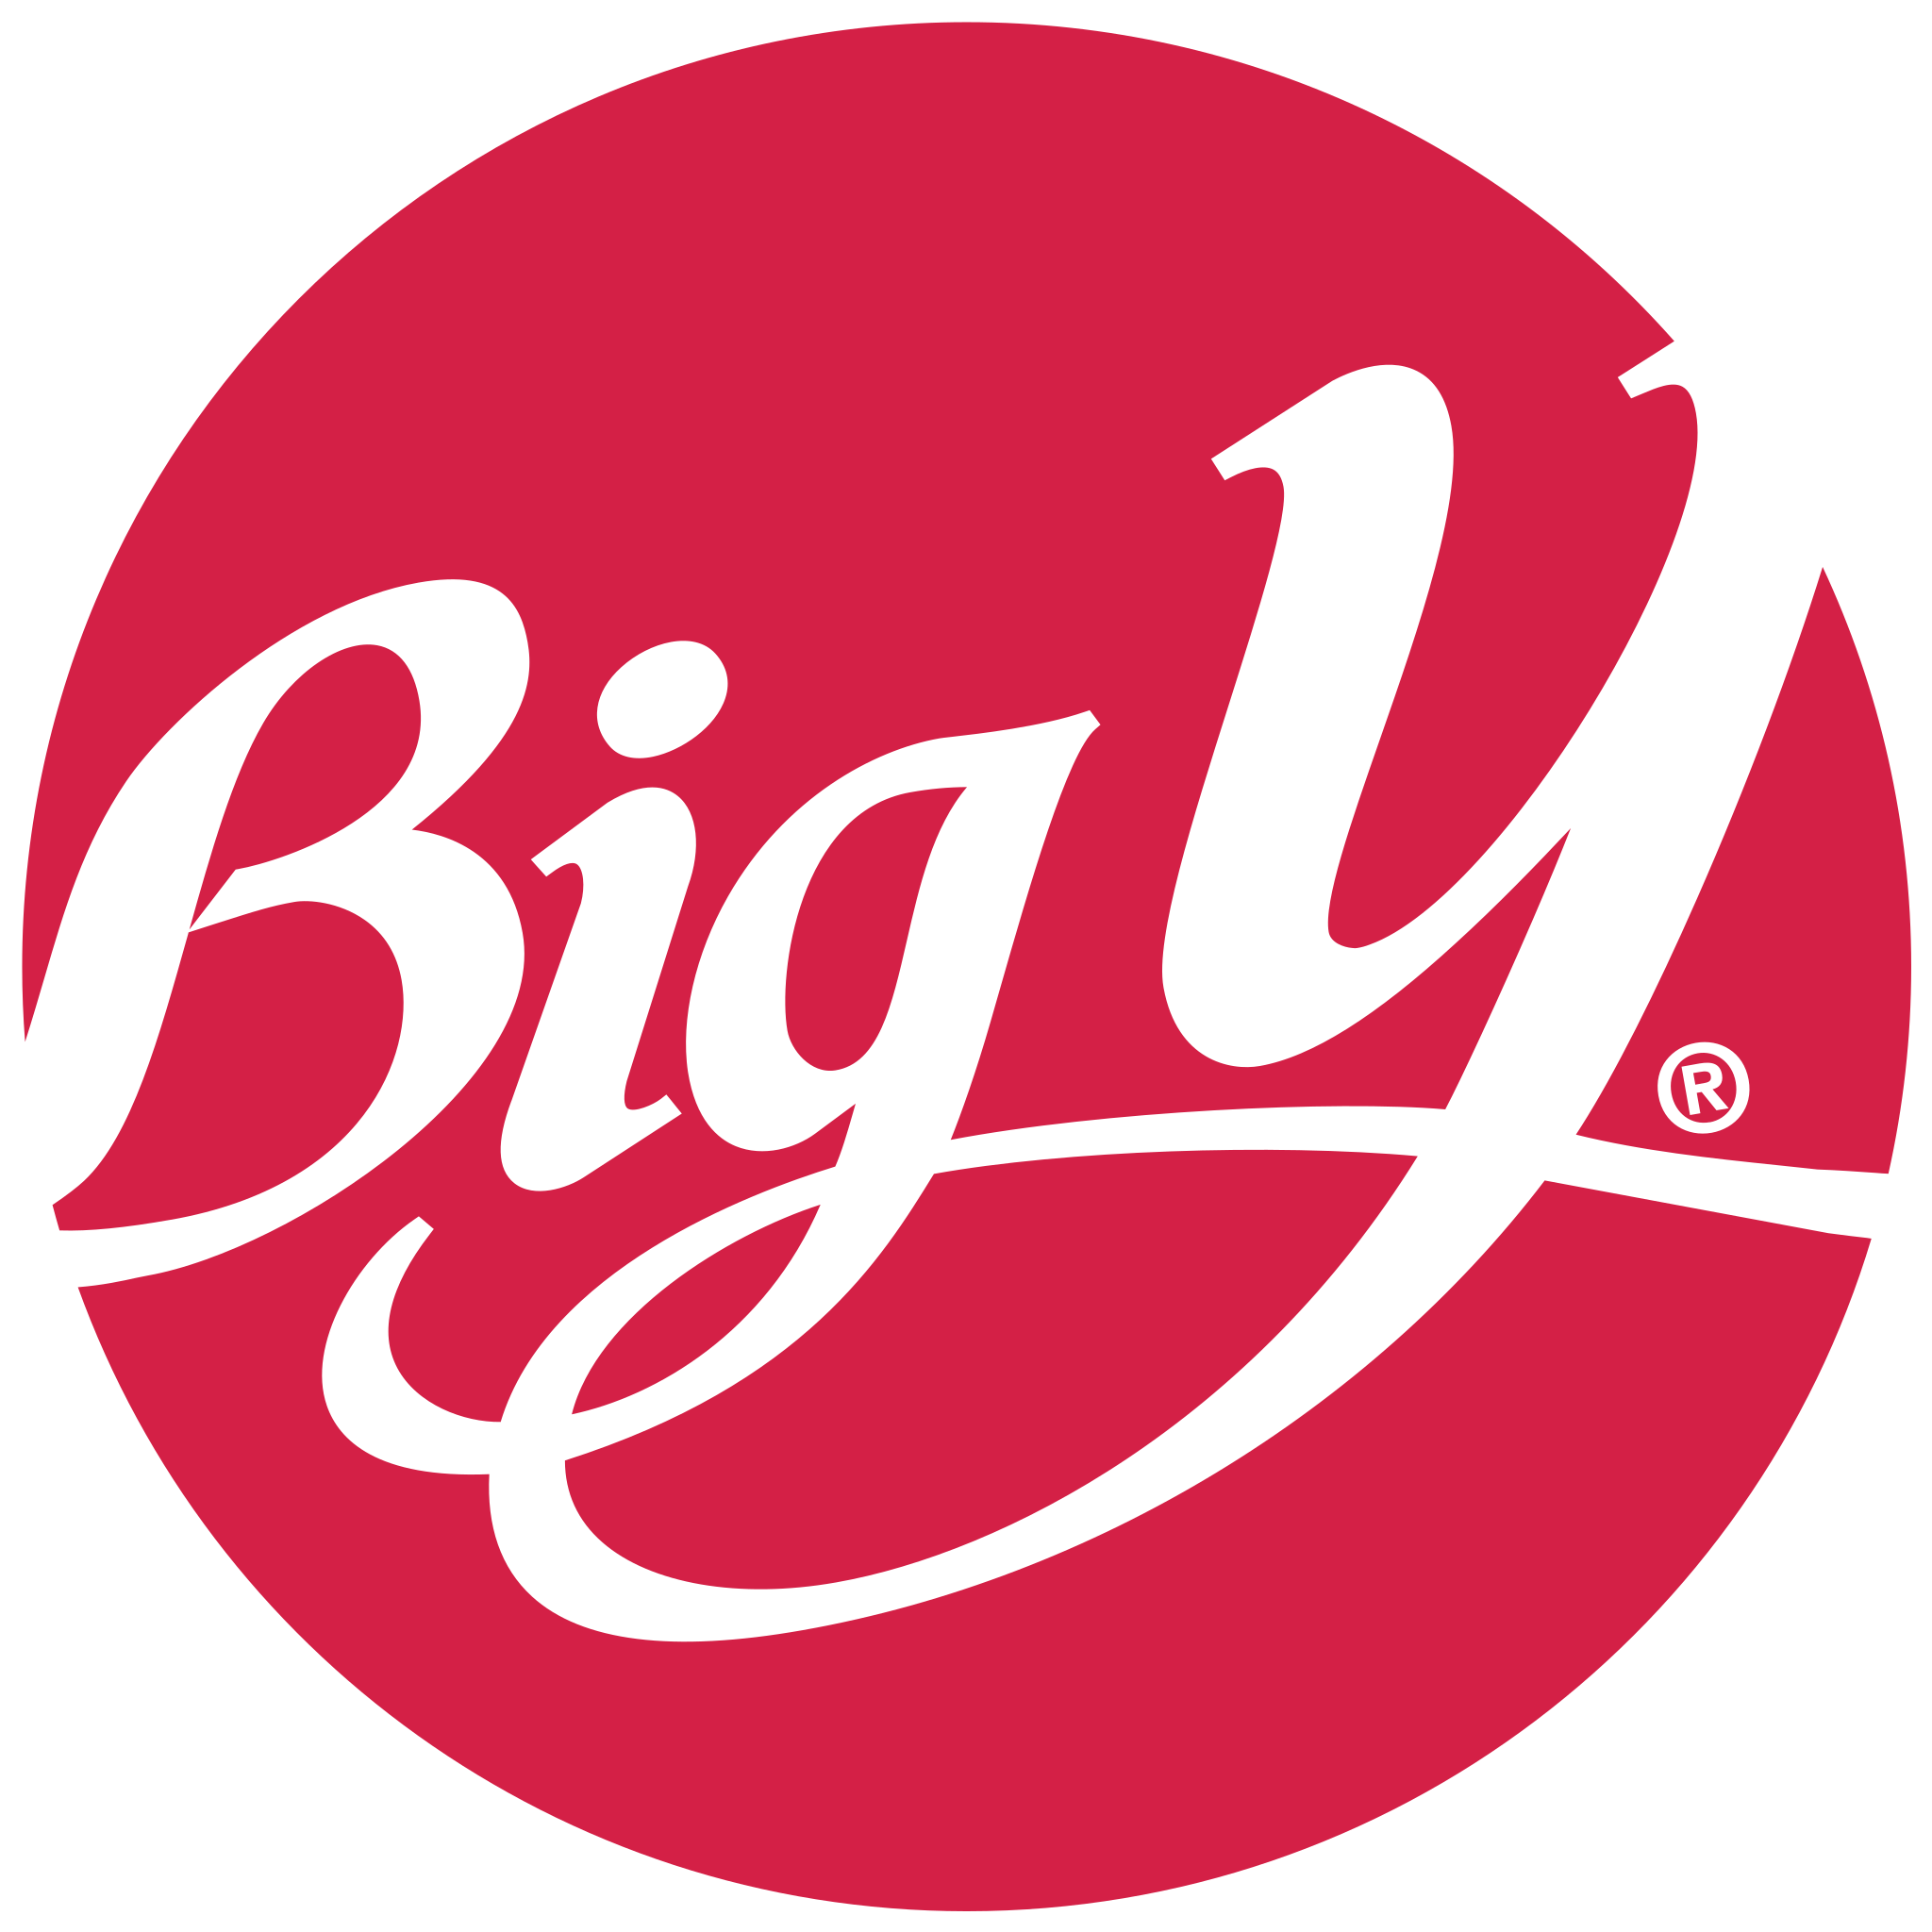 Big_Y_logo.svg (1).png